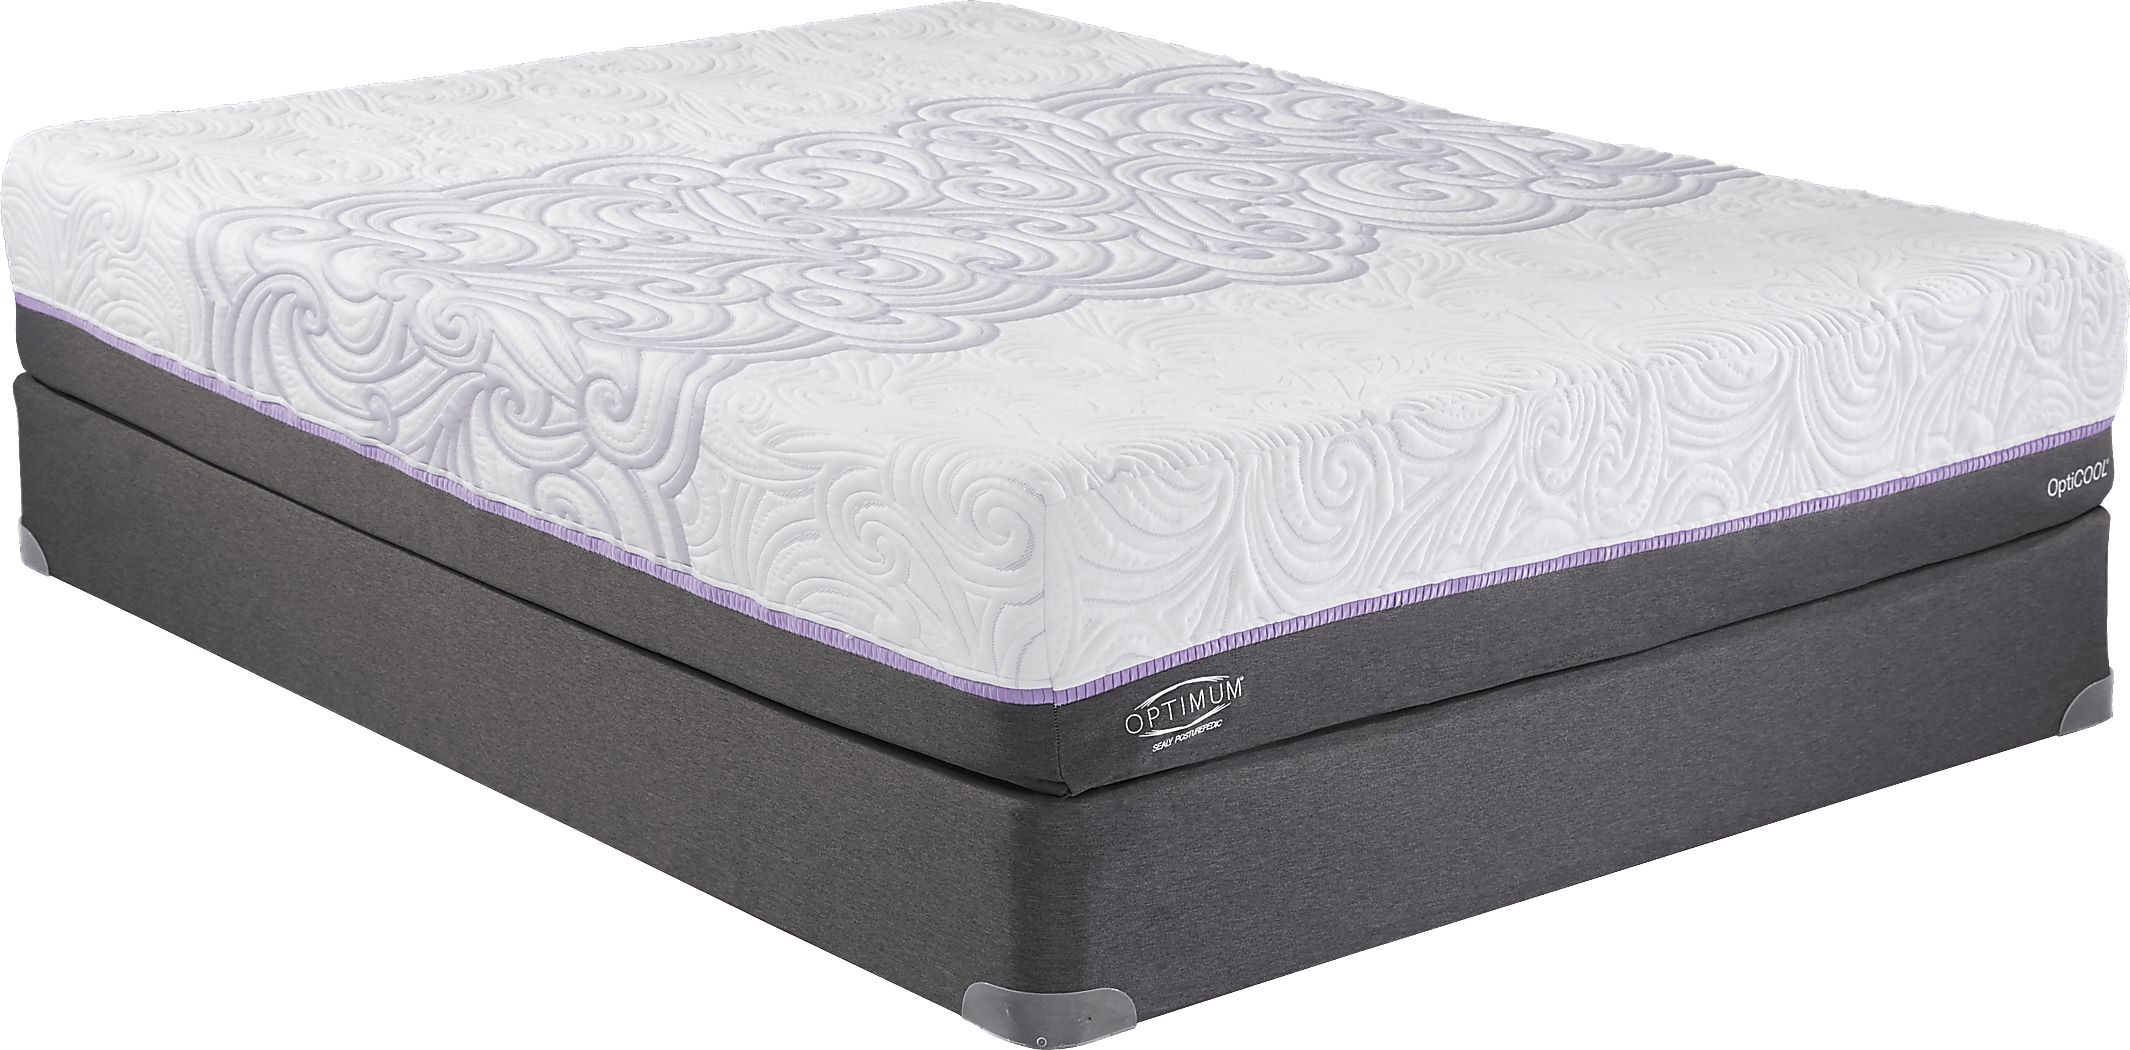 sealy optimum 12 elite courage plush mattress reviews